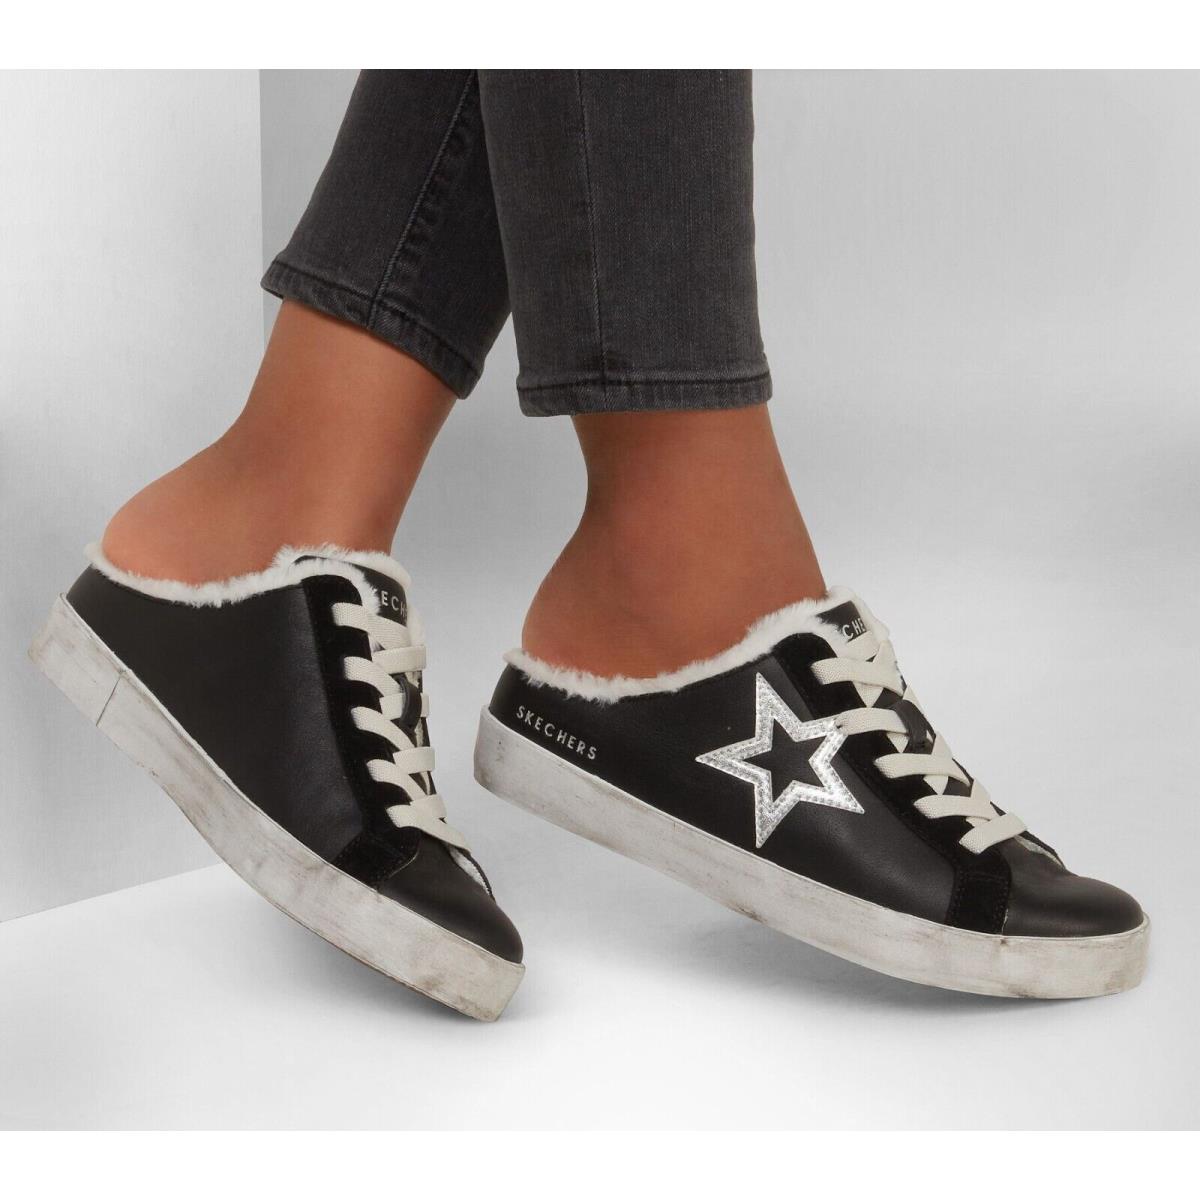 Skechers shoes Diamond Starz - Black 6